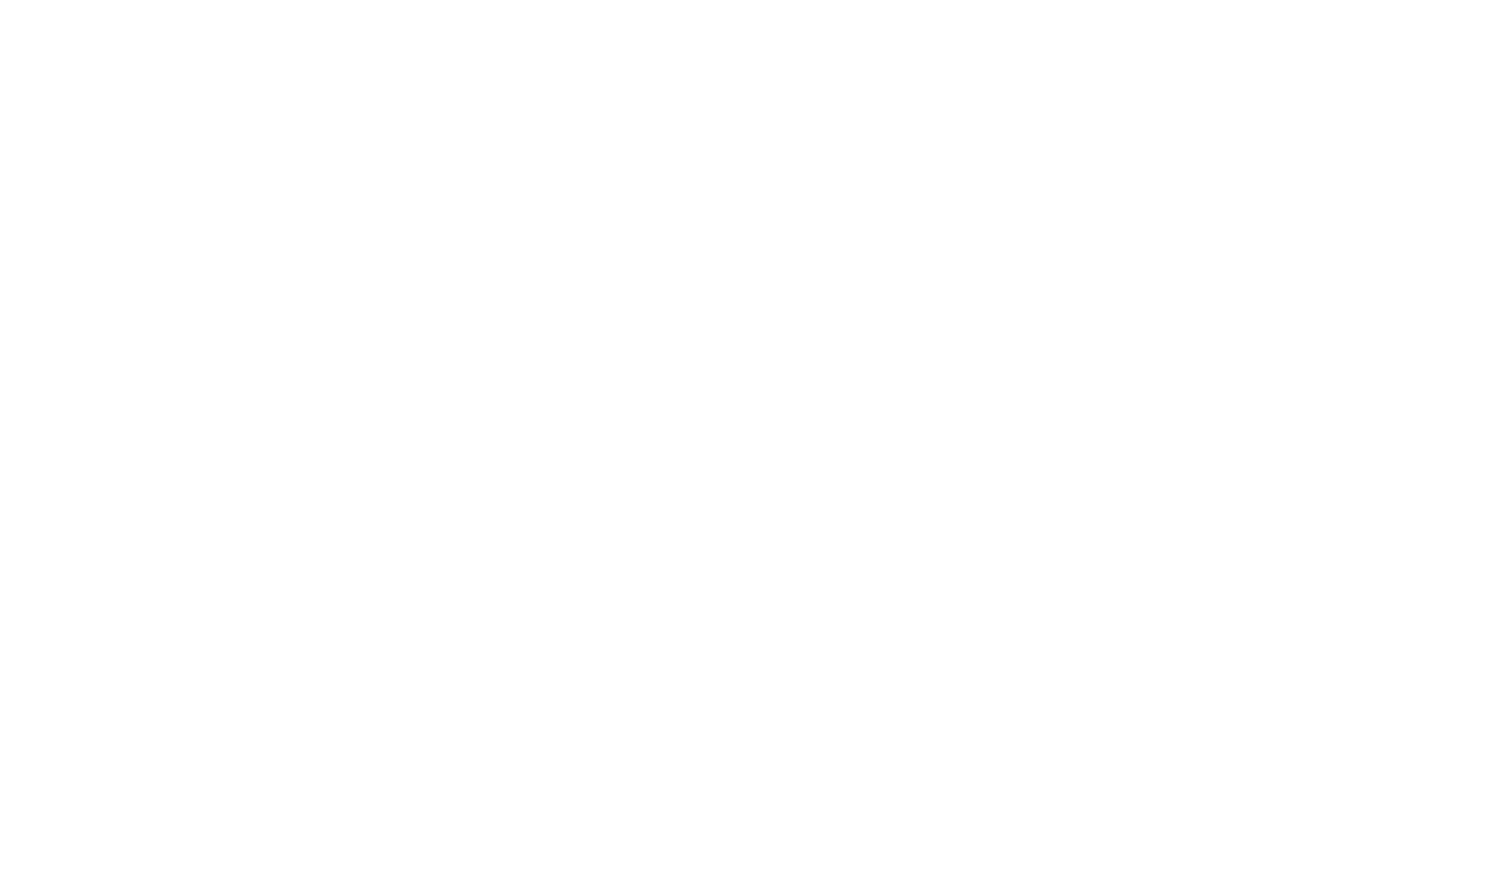 The Scott's Hotrods 'N Customs '51 Chevy